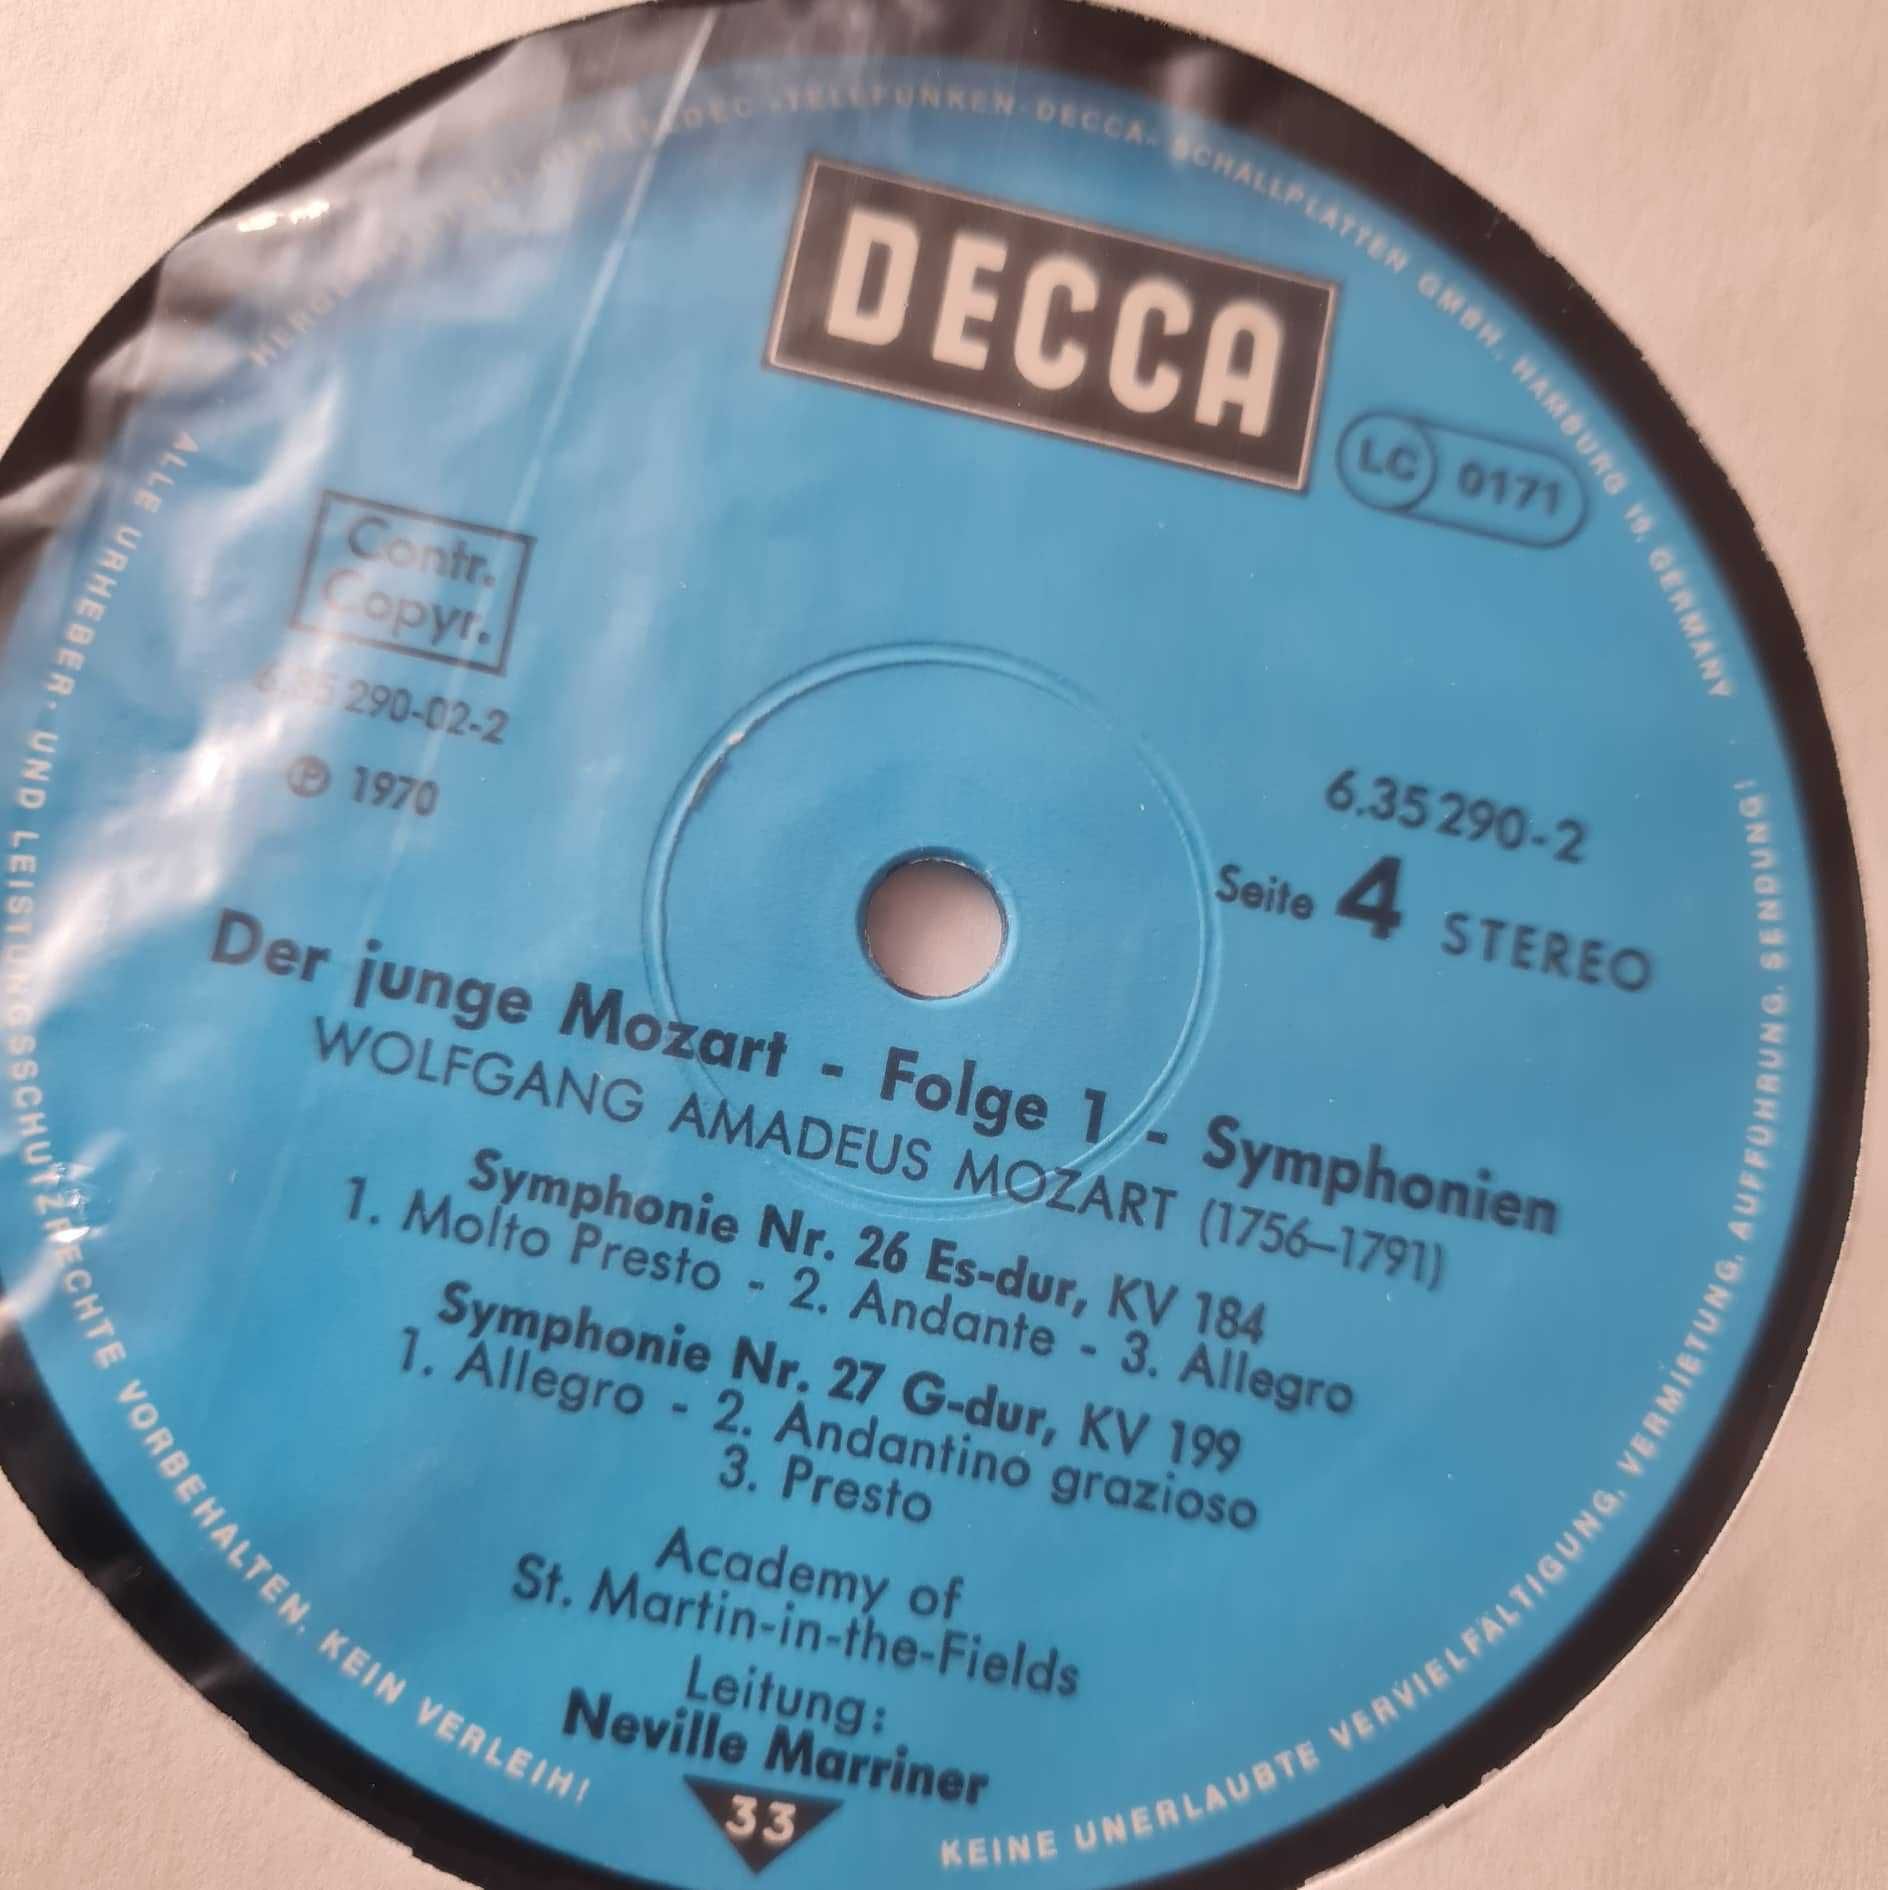 Der Junge Mozart 3 x Vinyl LP, Stereo, 1 x Box Set
Germany 1972